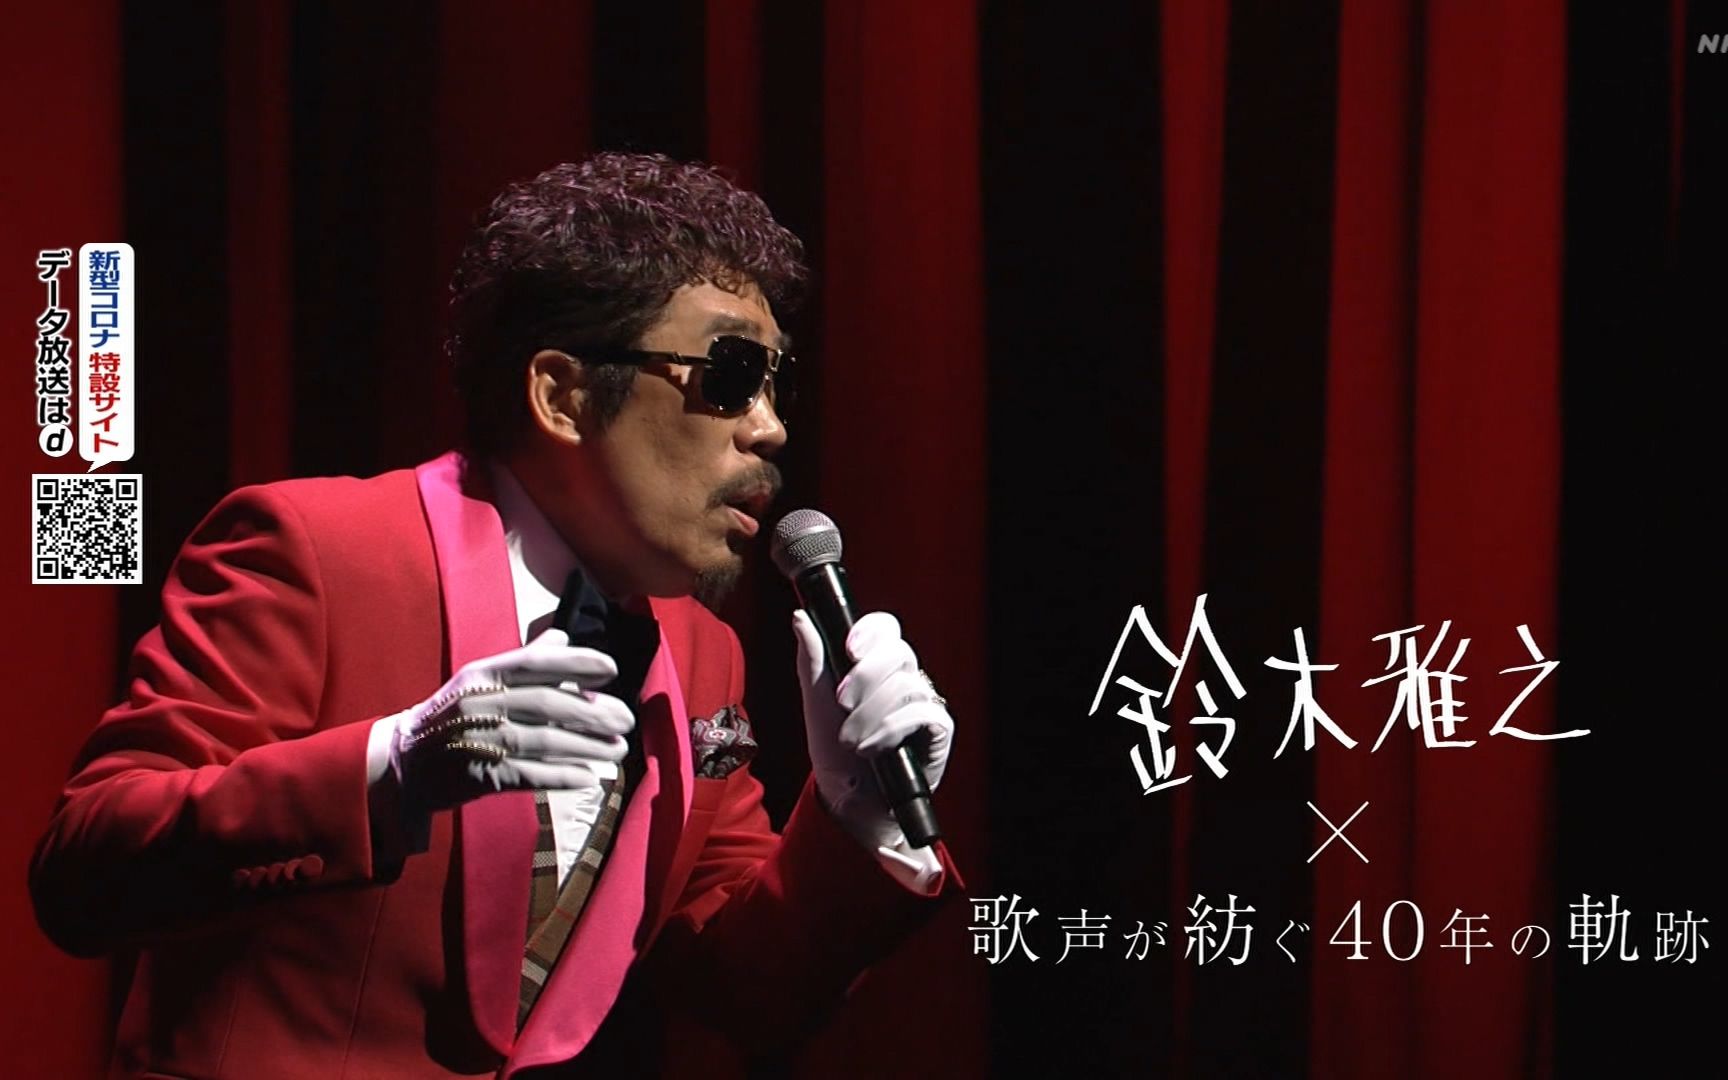 NHK SONGS - 鈴木雅之 40周年ノンストップメドレー!_哔哩哔哩_bilibili